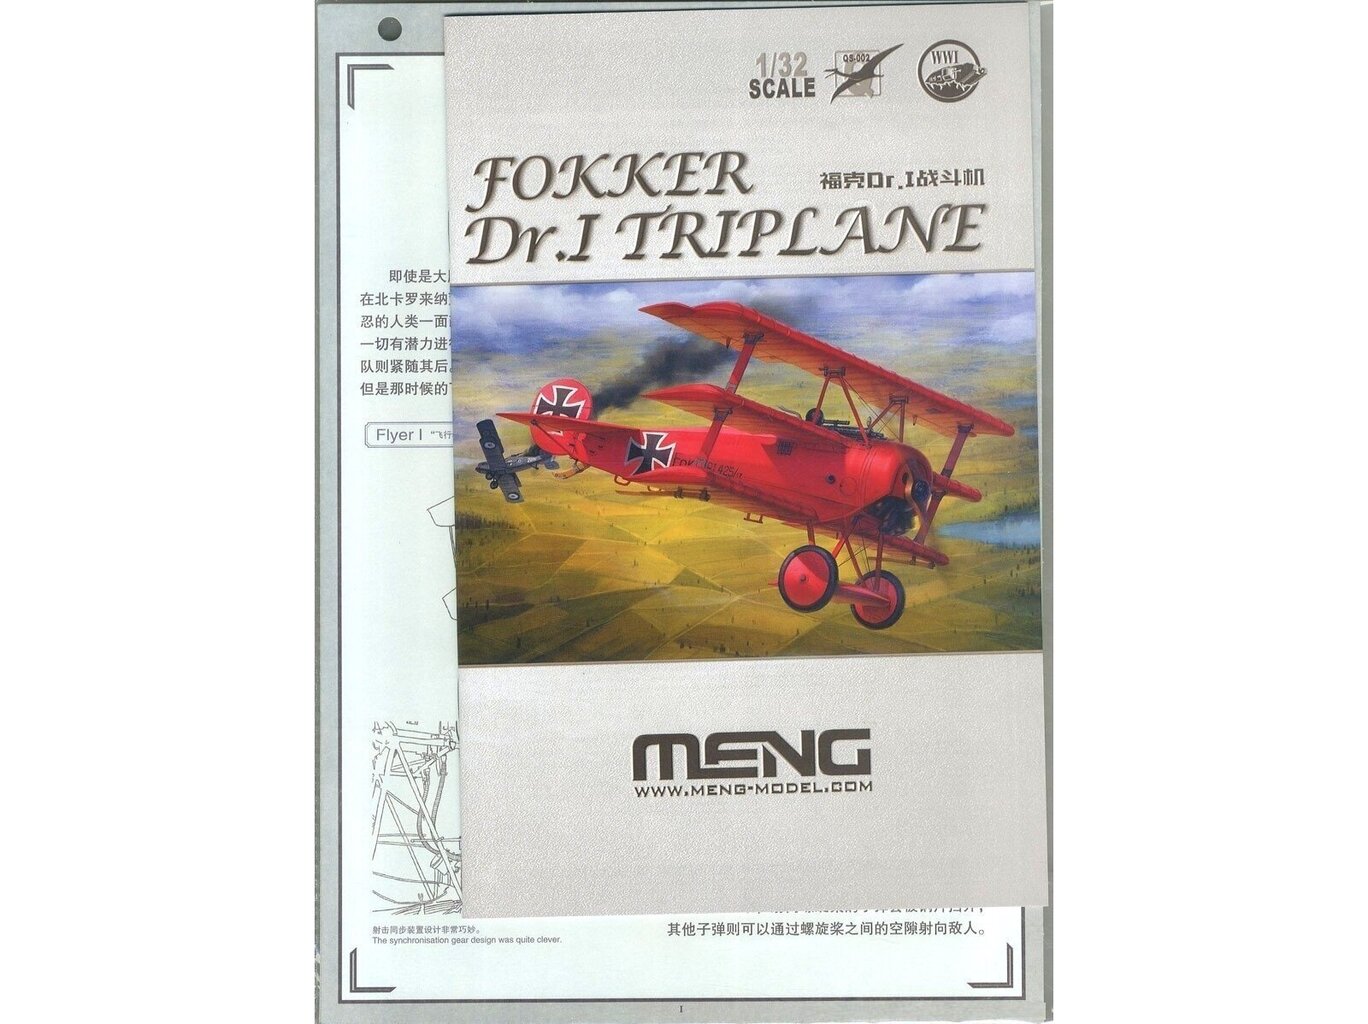 Meng Model - Limited Edition Fokker Dr.I Triplane "Red Baron" includes 1:10 bust of Manfred von Richthofen, 1/32, QS-002S цена и информация | Konstruktori | 220.lv